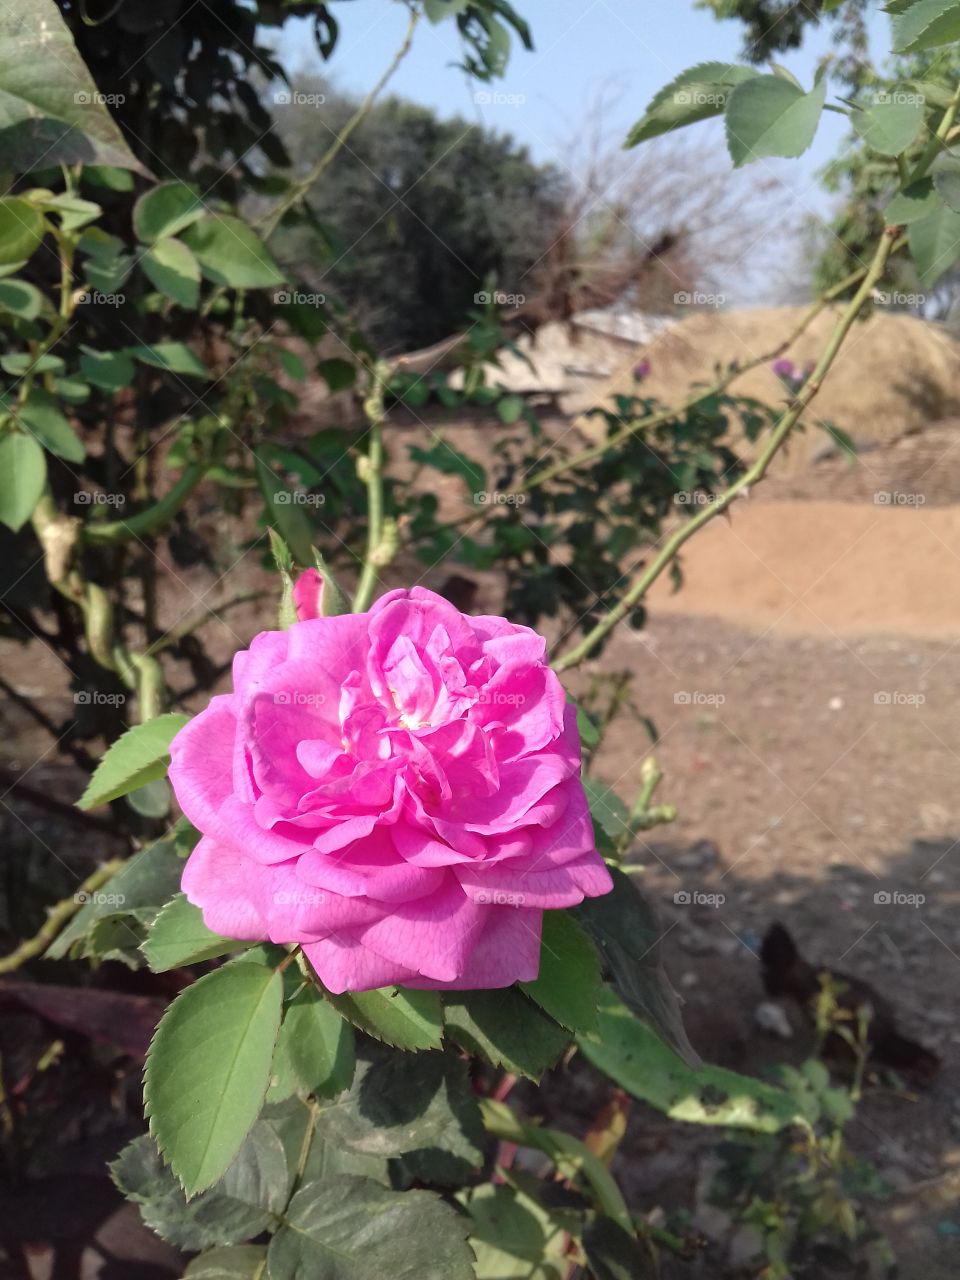 lovly rose